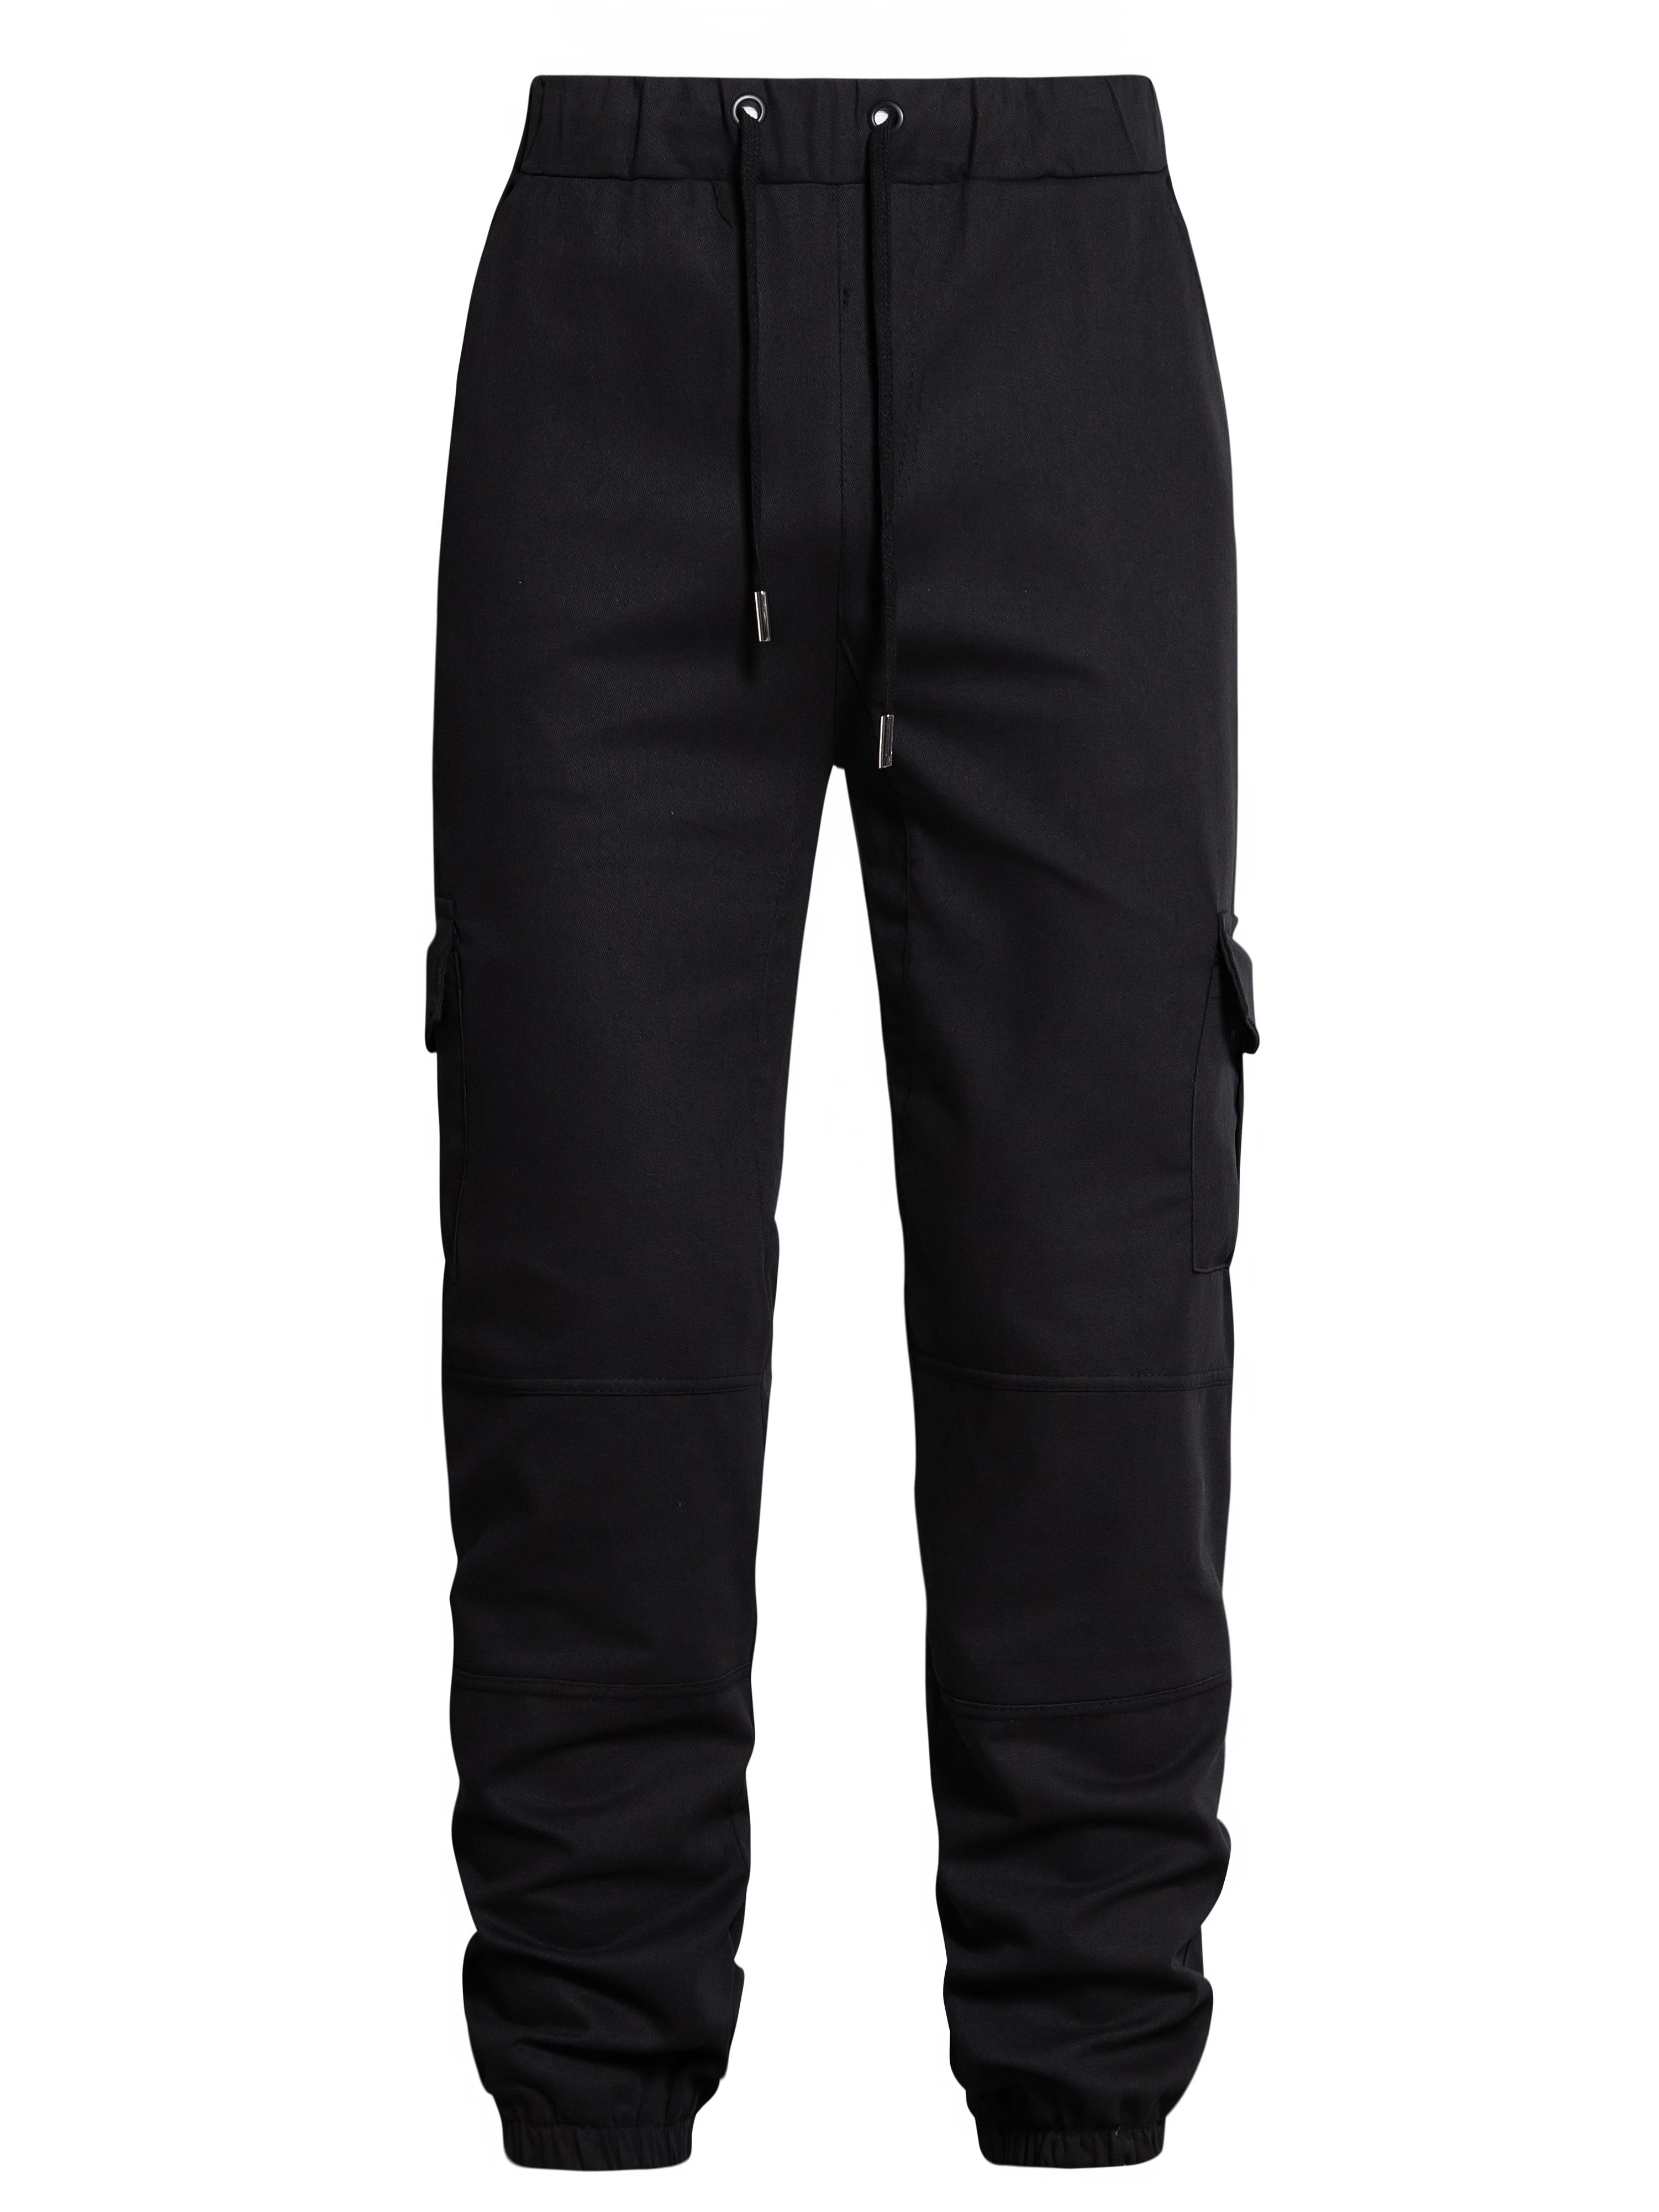 Plus Size Multi-pockets Cargo Pants Men Streetwear Baggy Jogger